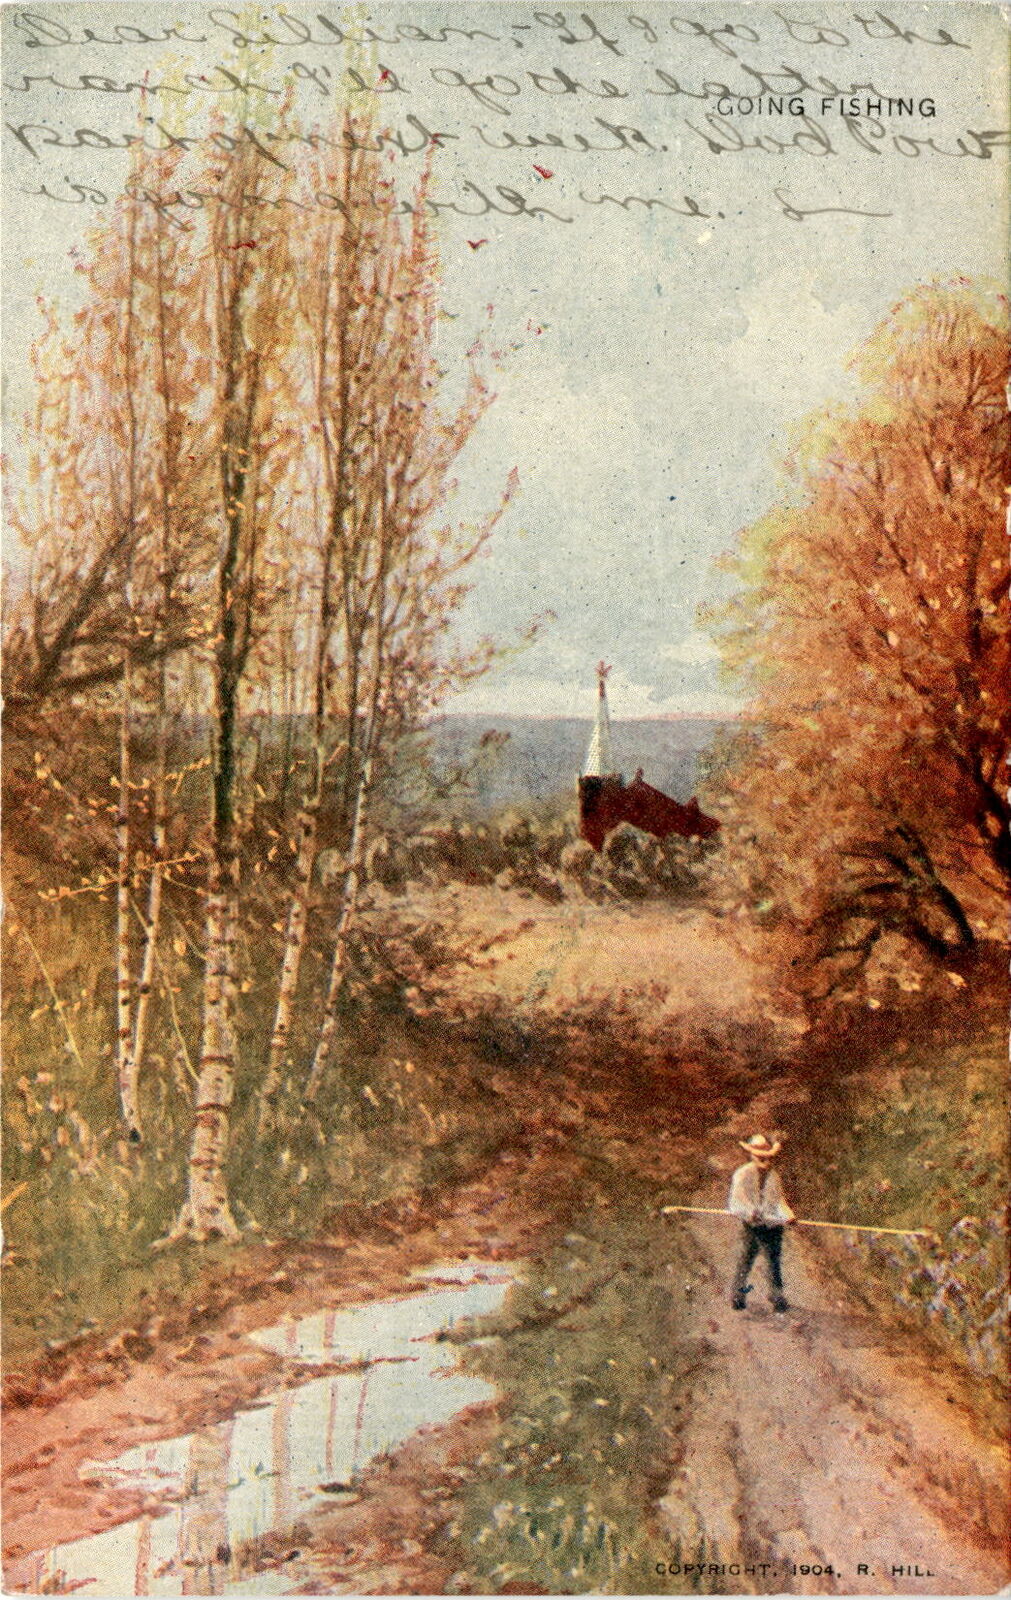 fishing scene, 1904, Miss Lillian Halford, Butte, Montana, Ed Postcard